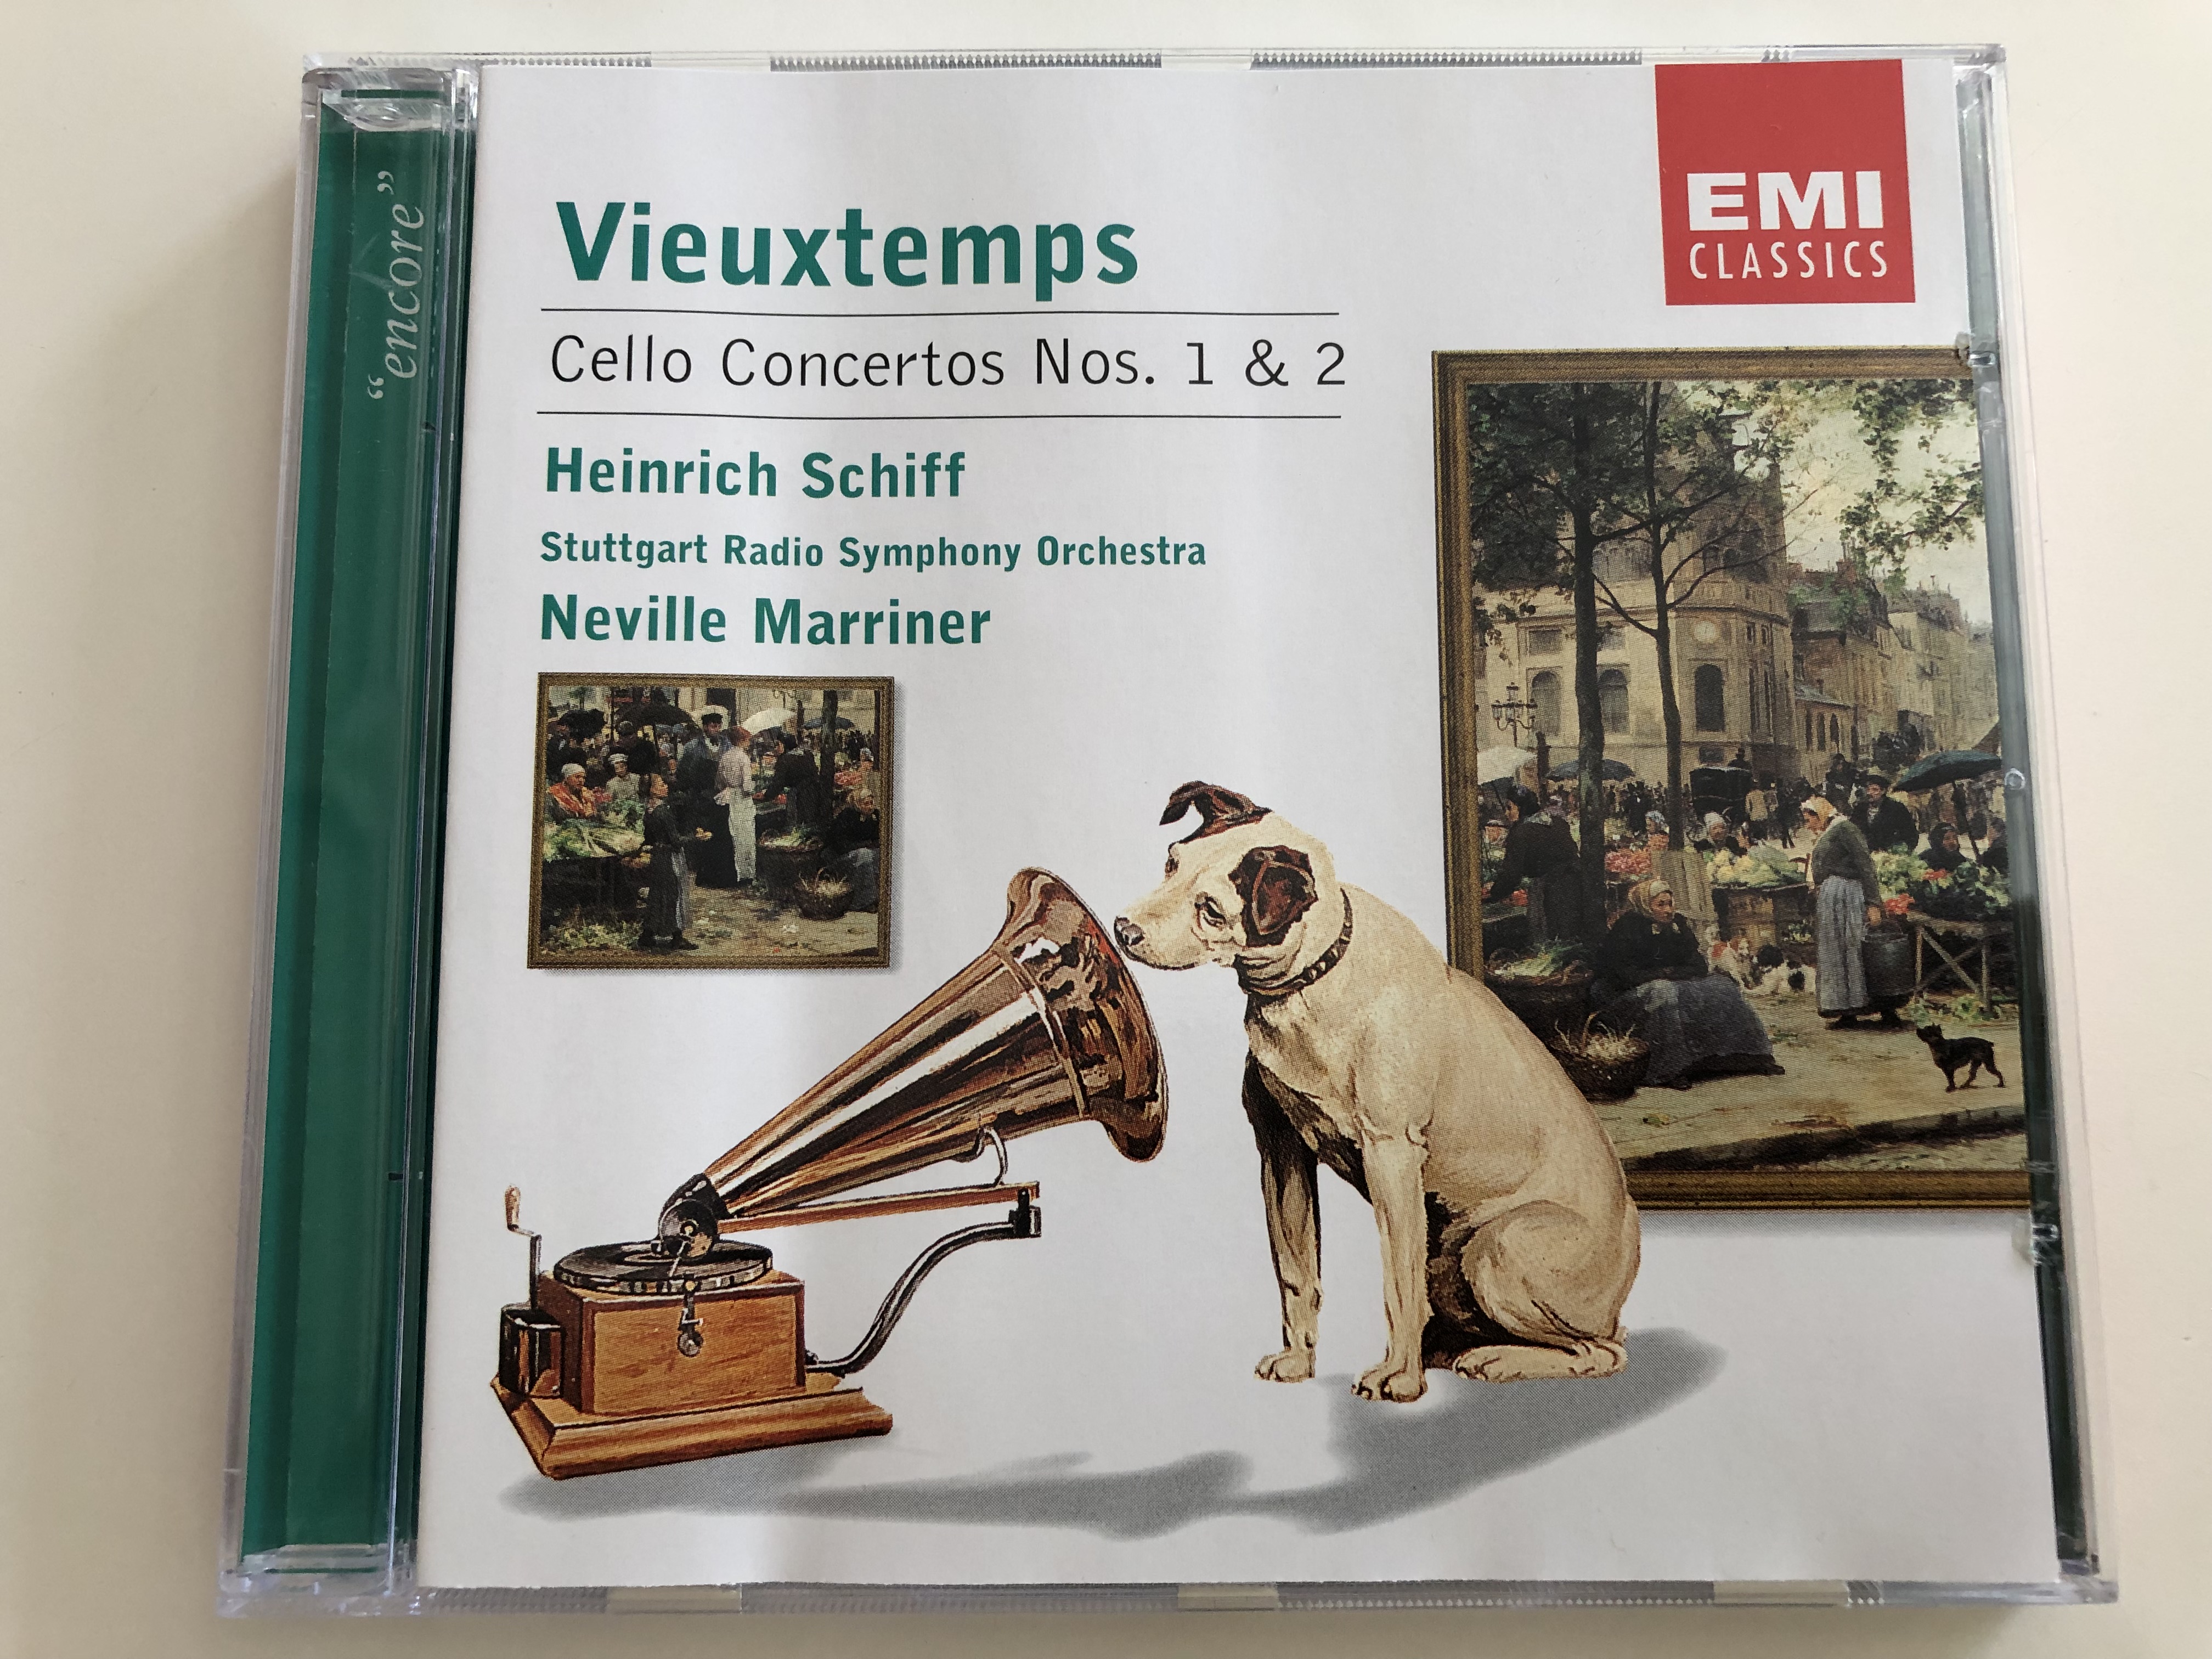 vieuxtemps-cello-concertos-nos.-1-2-heinrich-schiff-cello-stuttgart-radio-symphony-orchestra-conducted-by-sir-neville-marriner-emi-classics-audio-cd-2002-1-.jpg